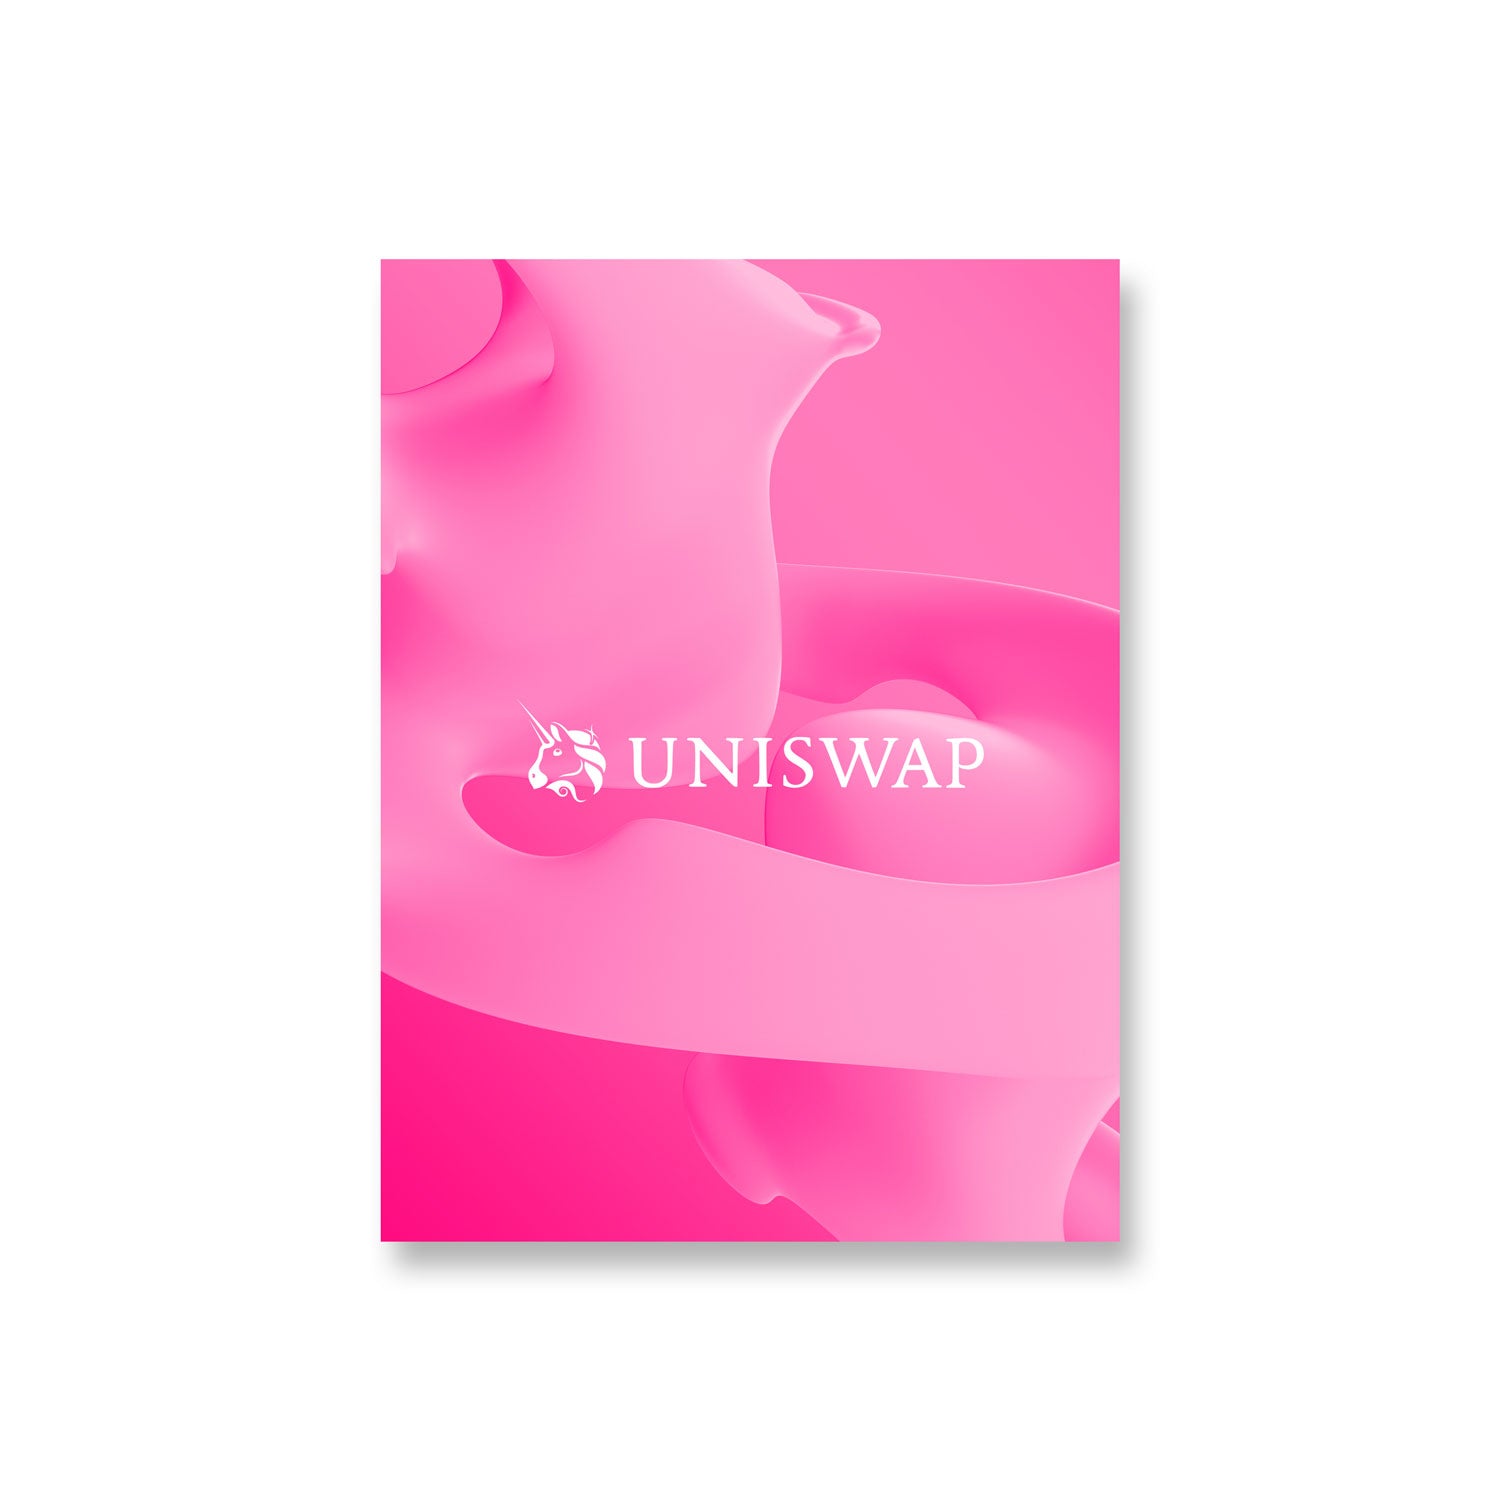 uniswap abstract logo poster crypto defi wall art